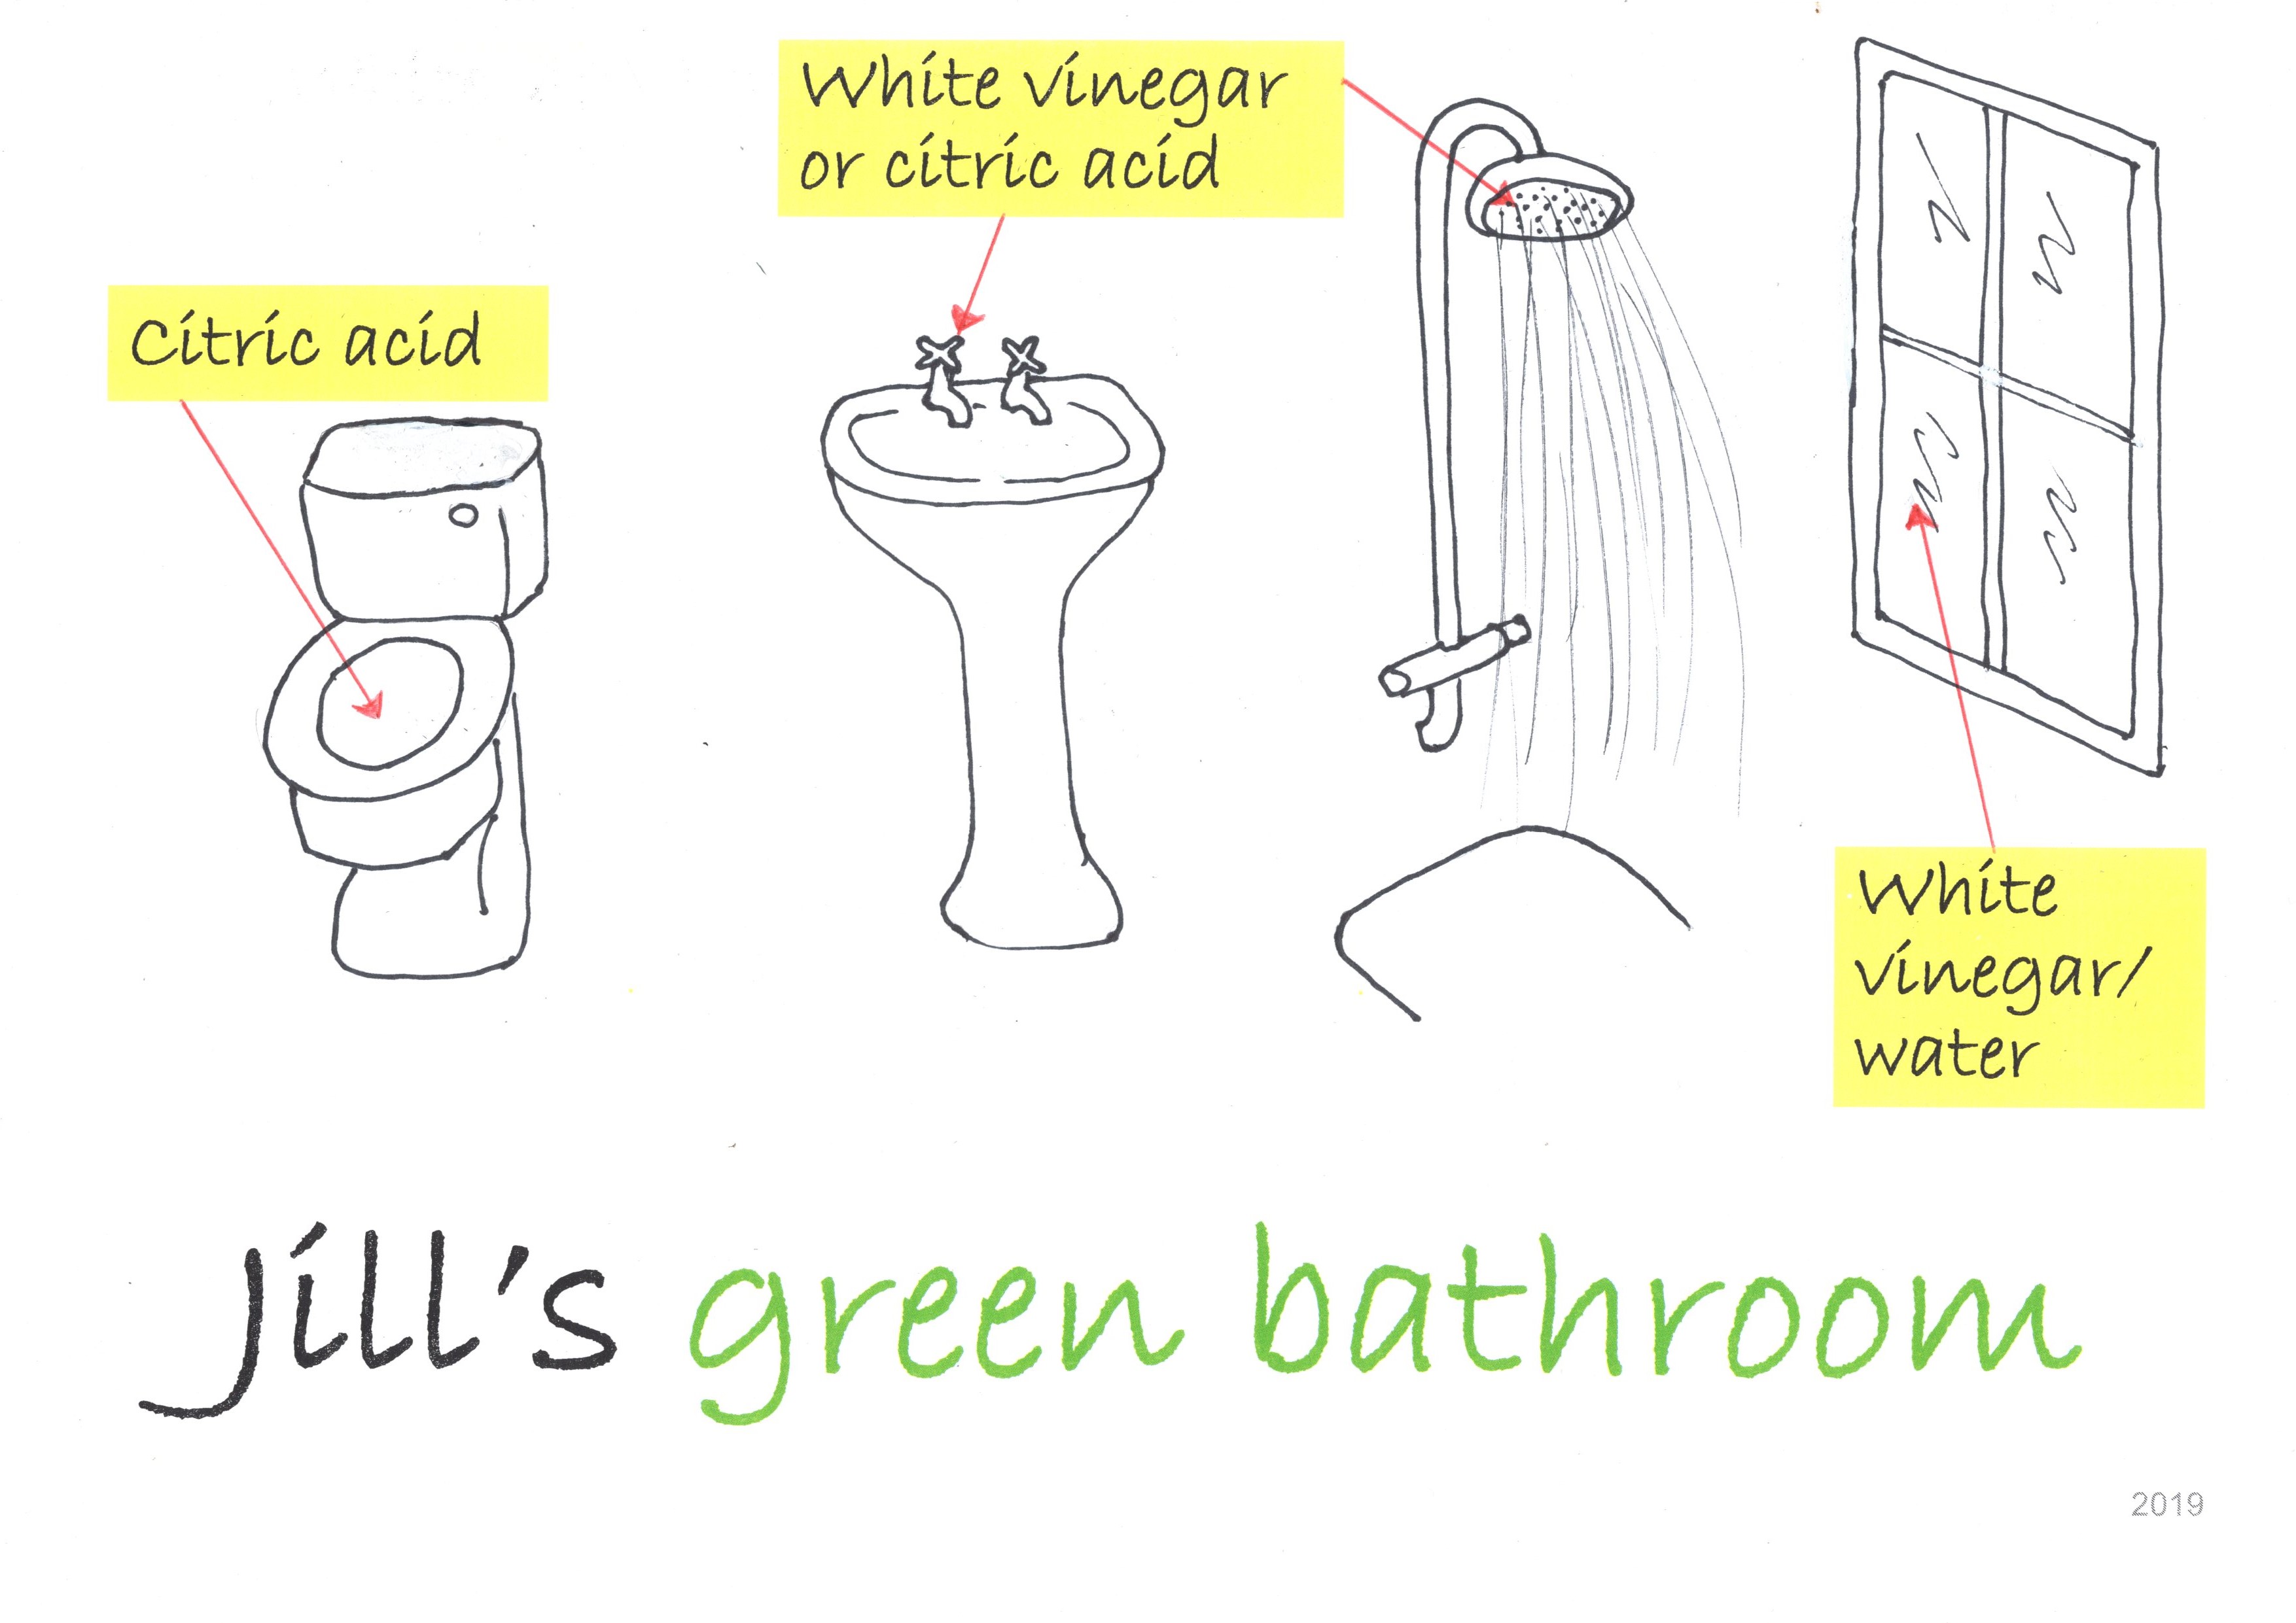 Jill's green bathroom